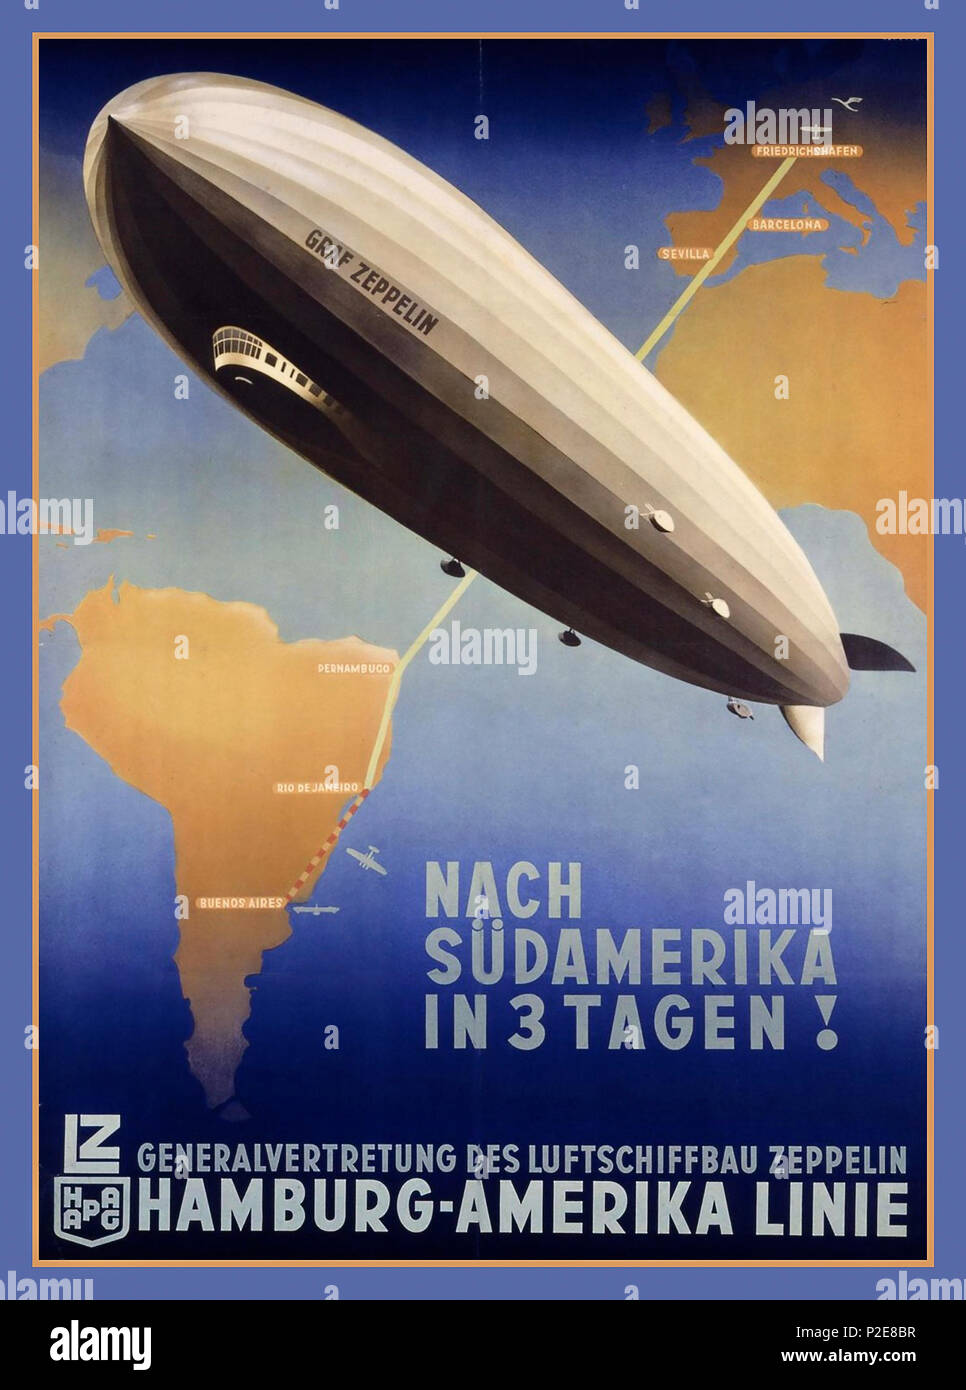 1930's Vintage Travel Poster Graf Zeppelin Hamburg-Amerika-Line Ottomar Anton Erasmus Druck Berlin 1932 South America in 3 days by Airship Stock Photo